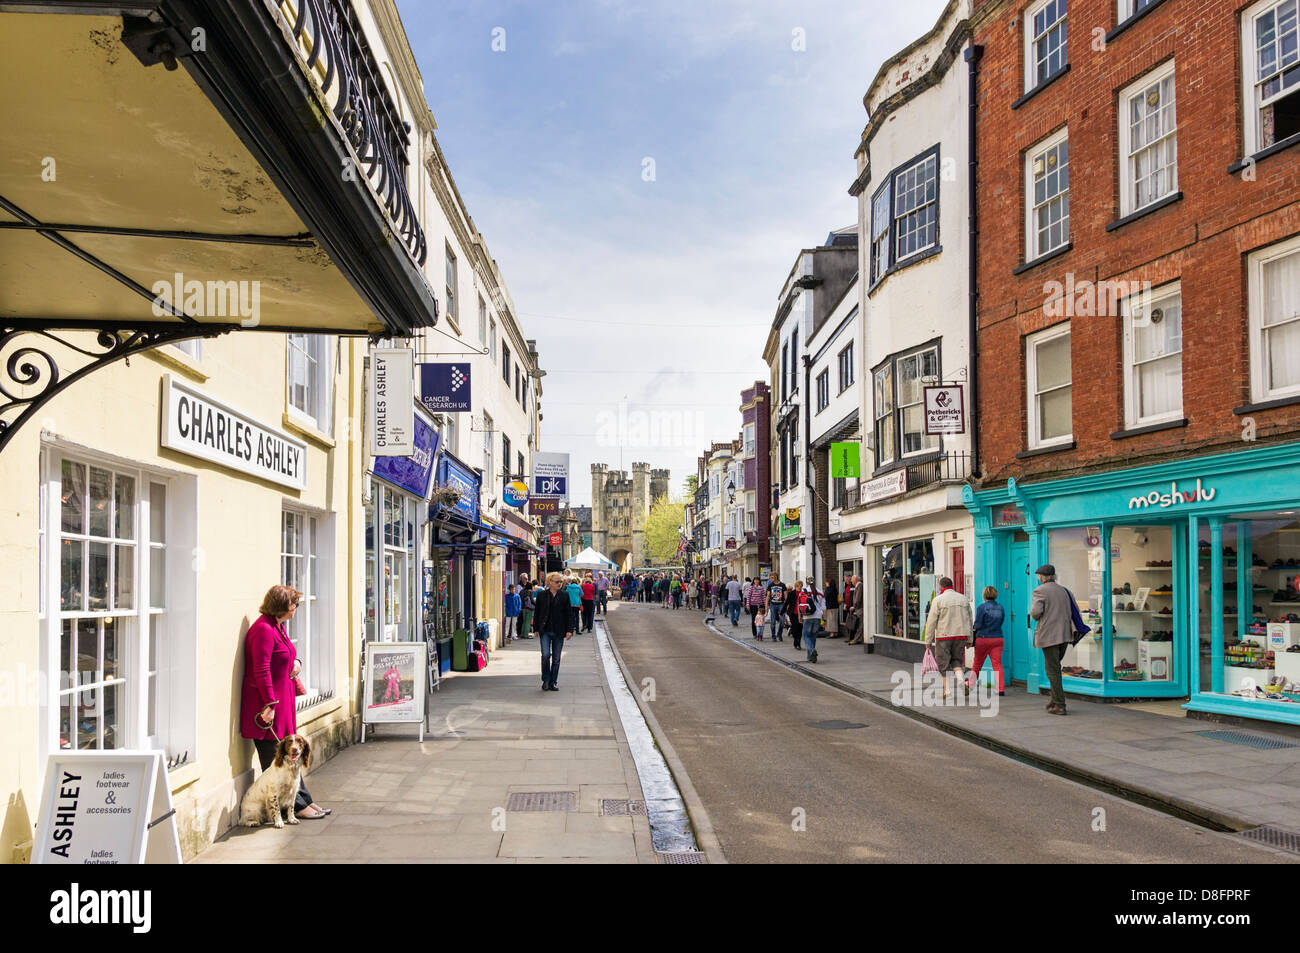 High street scene in Wells, Somerset, England, UK Stock Photo